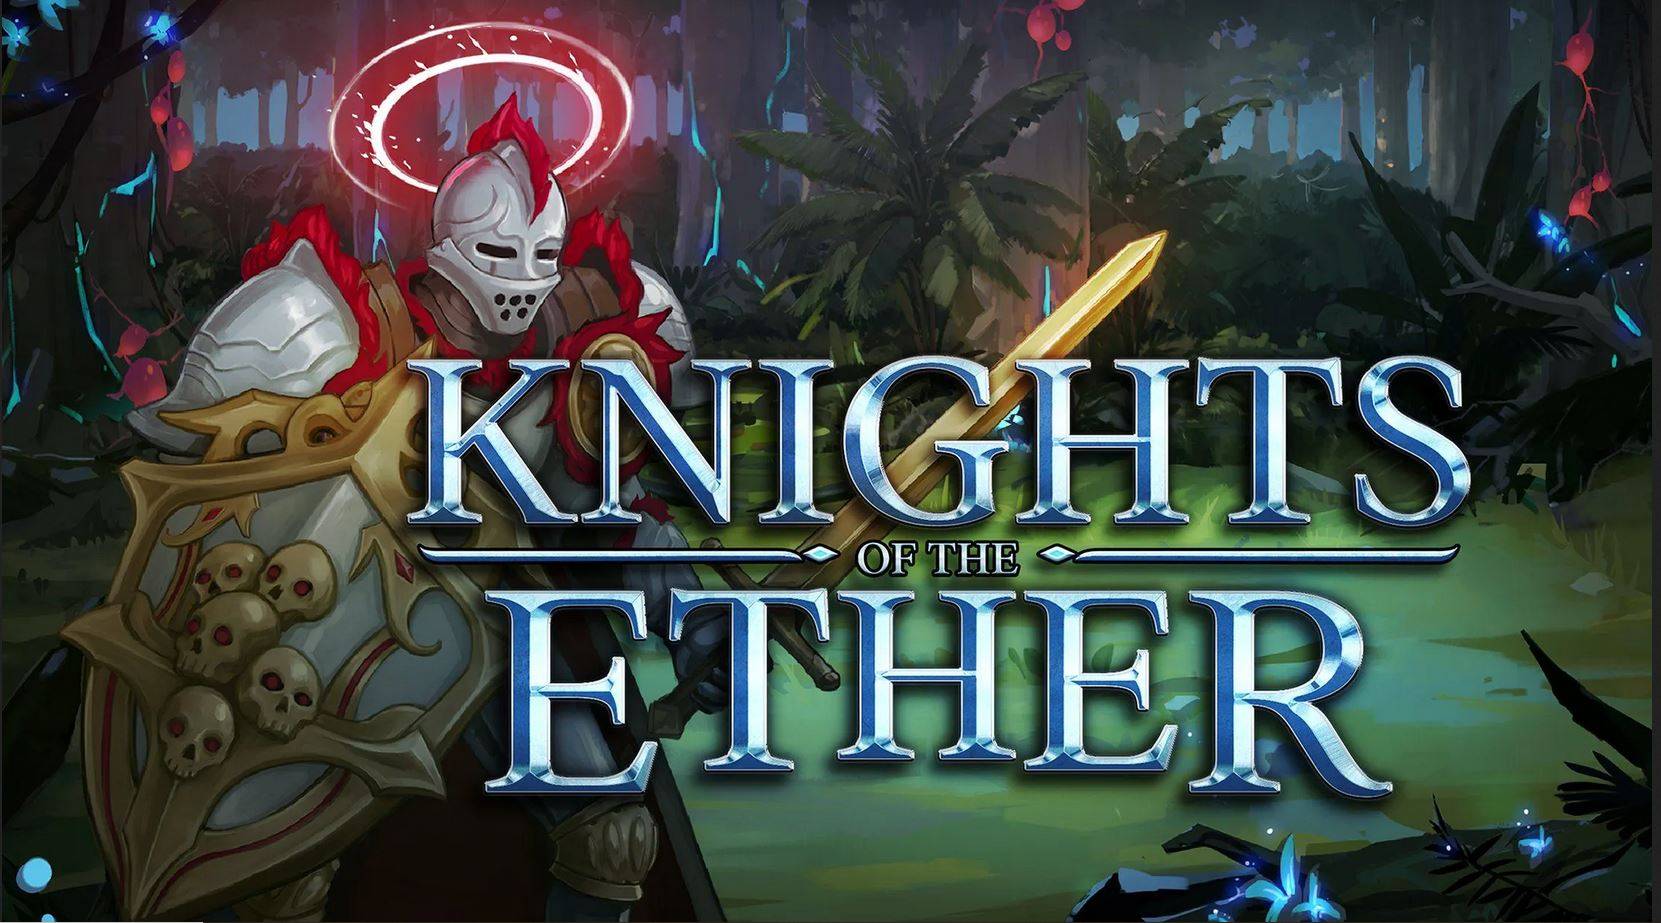 Knights of the Ether: Blightfell - Juego de cadena de bloques Web3 P2E